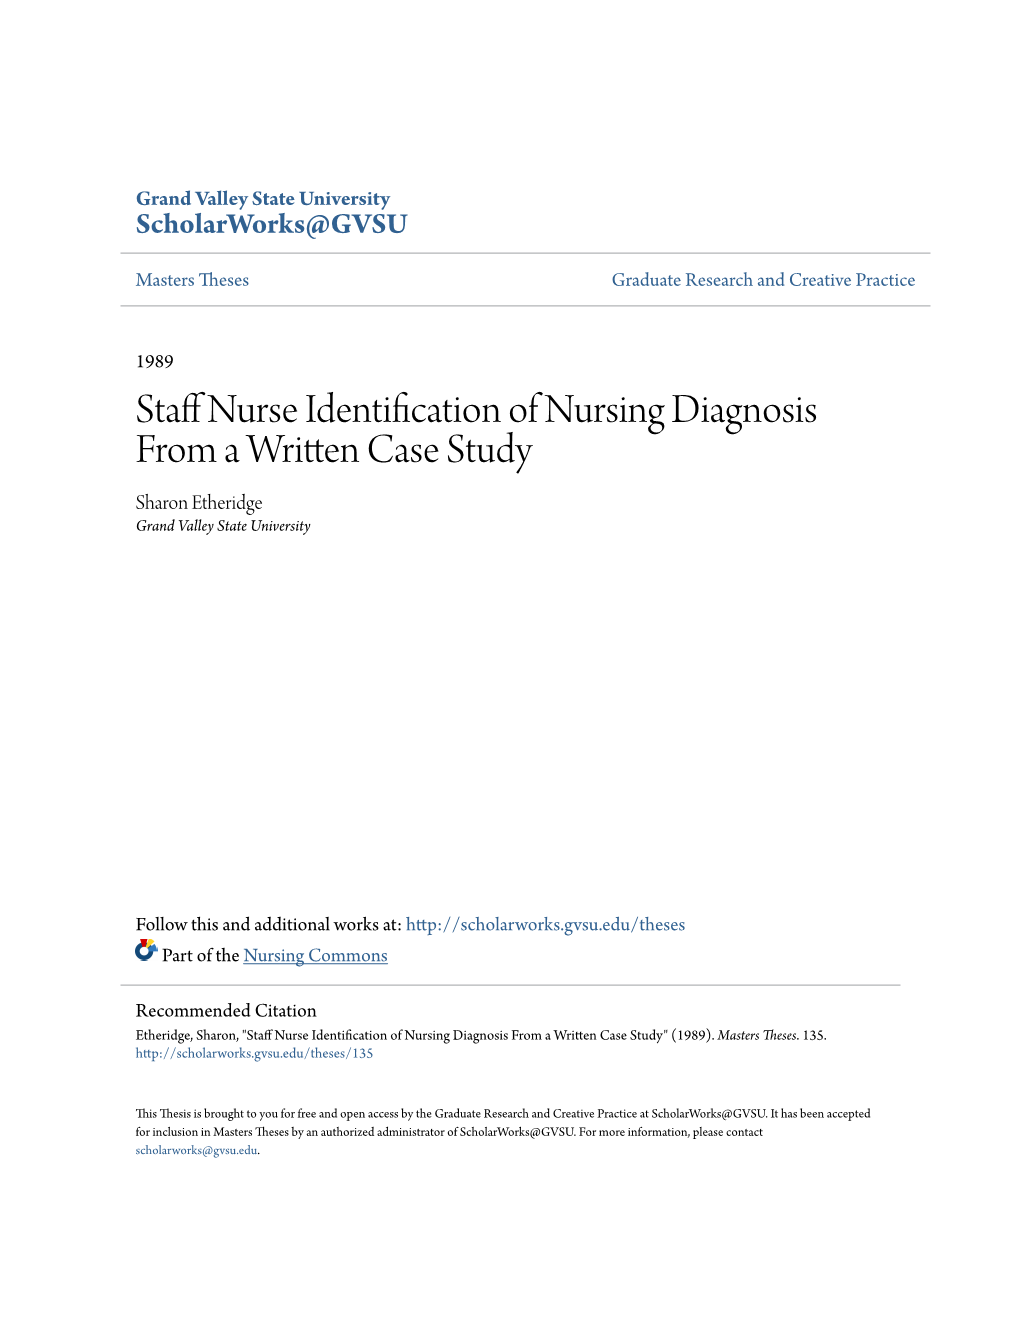 Staff Nurse Identification of Nursing Diagnosis from a Written Case Study